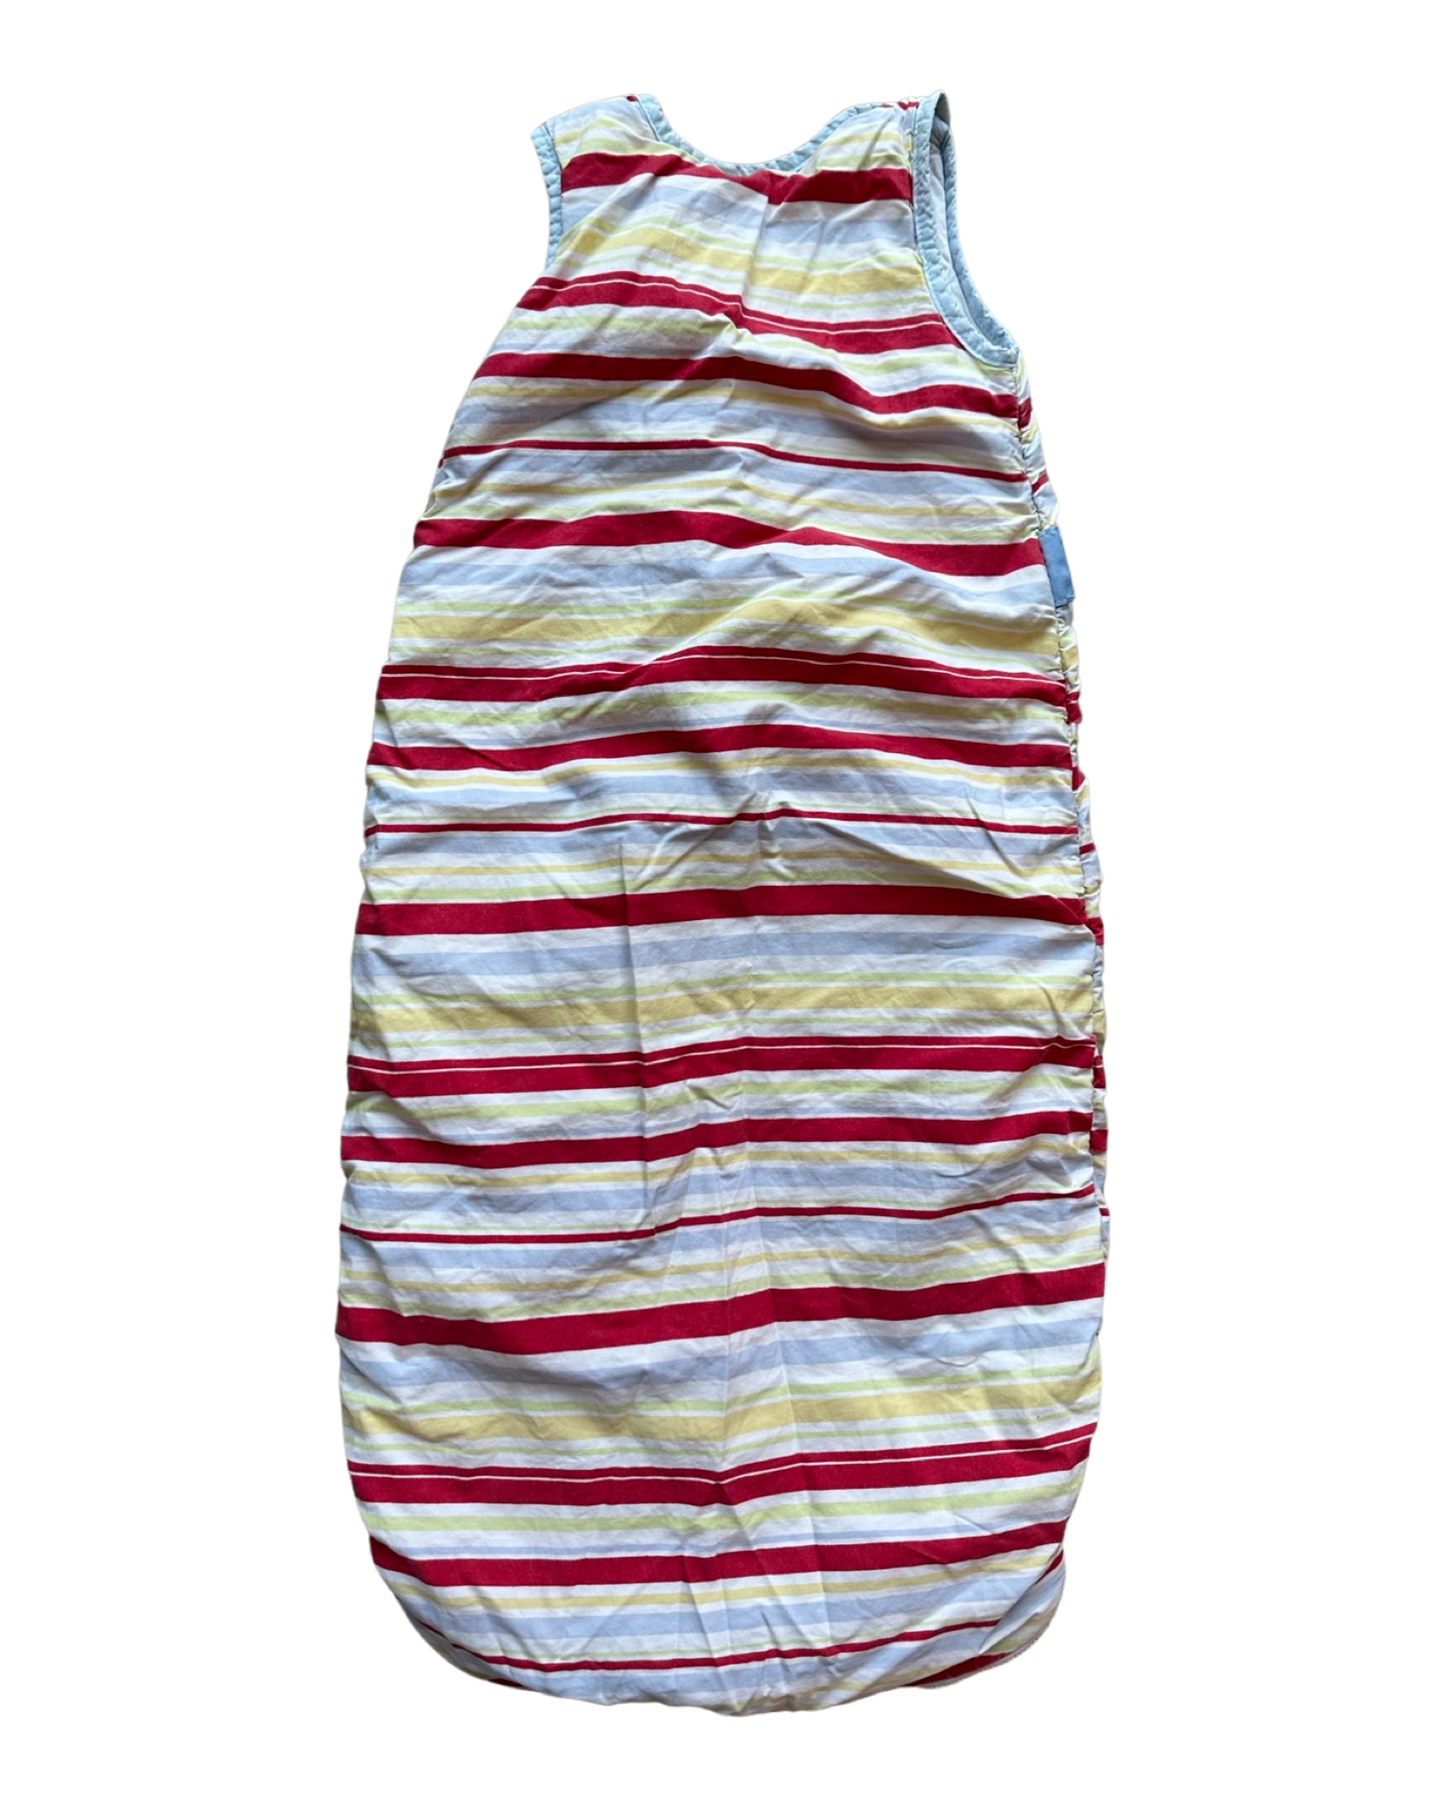 JoJo Maman Bebe striped sleeping bag 2.5tog (size 6-18mths)